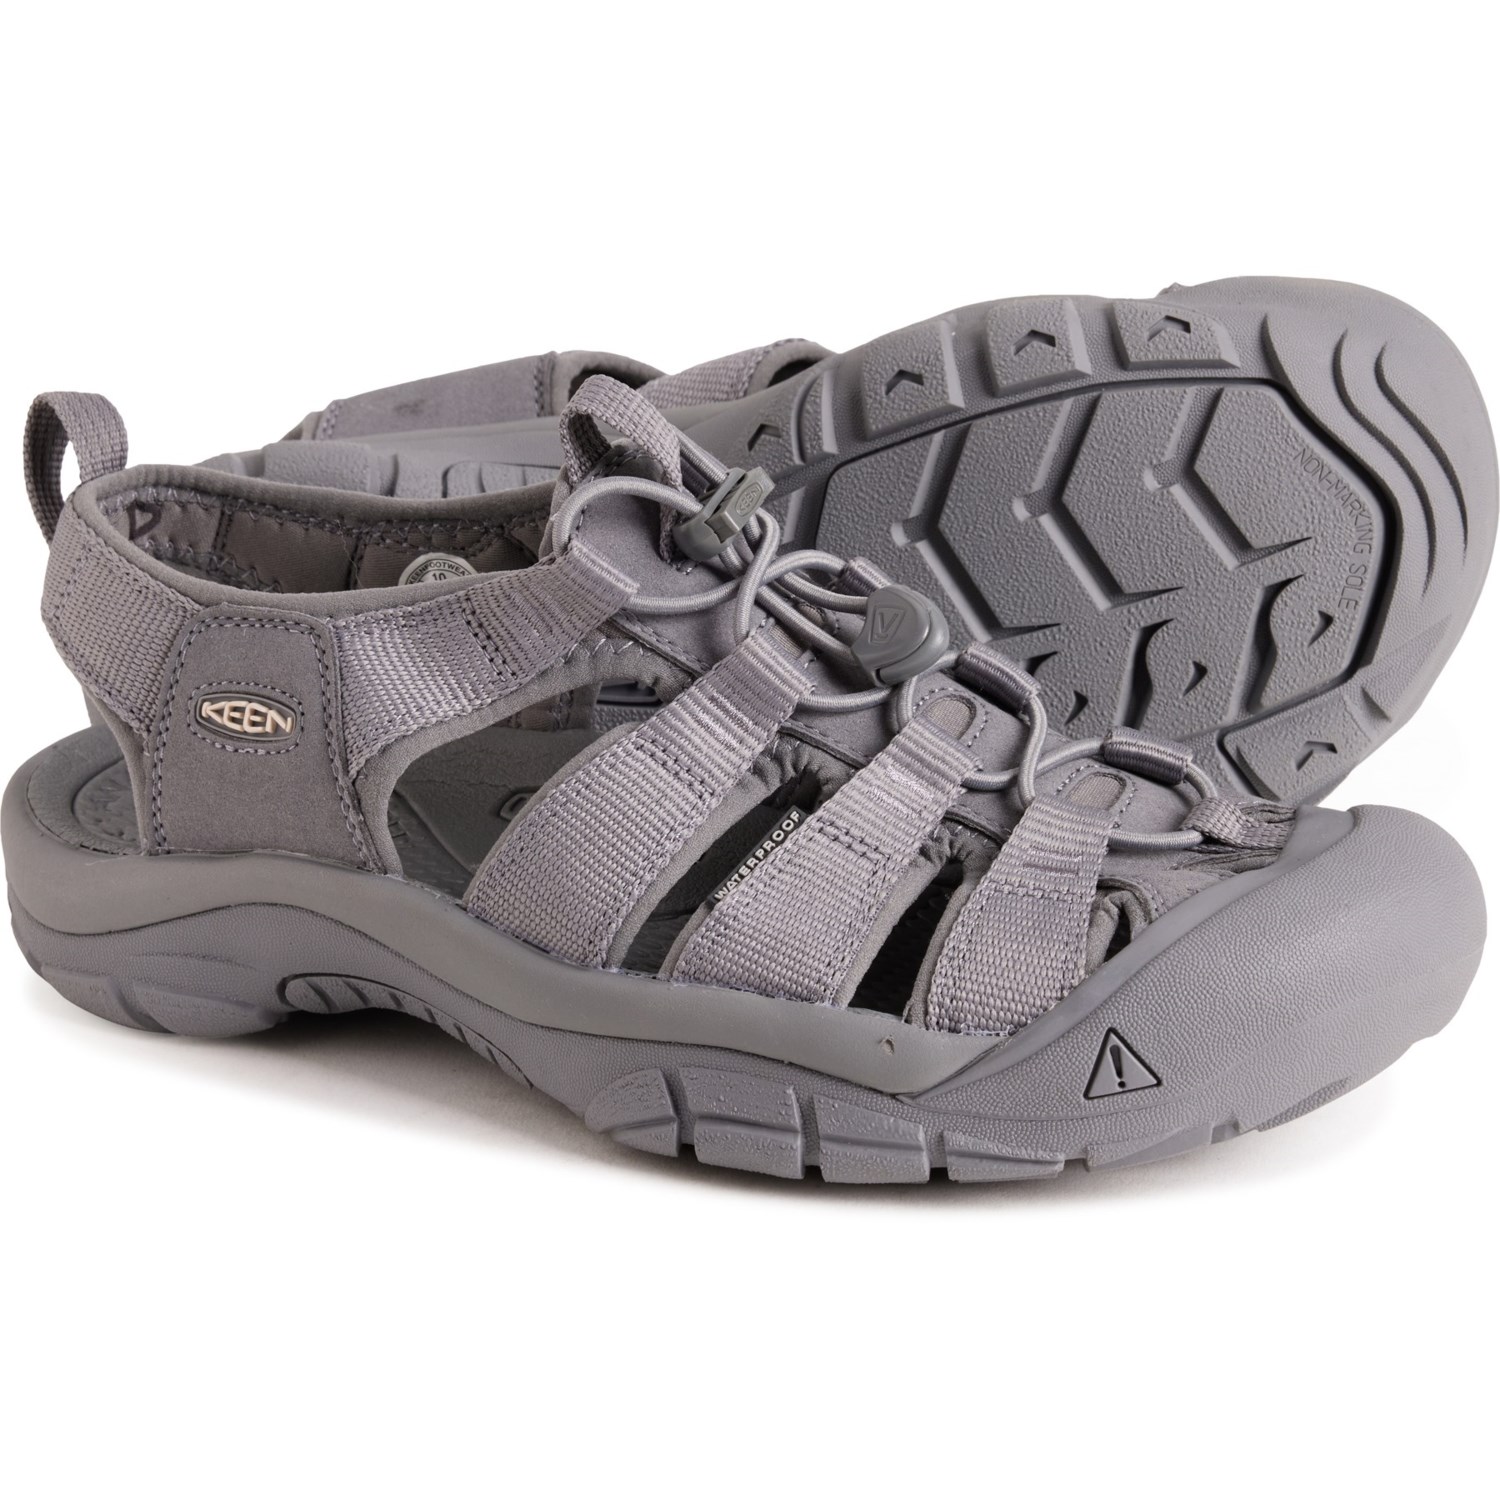 Keen Newport H2 Sport Sandals (For Men) - Save 37%